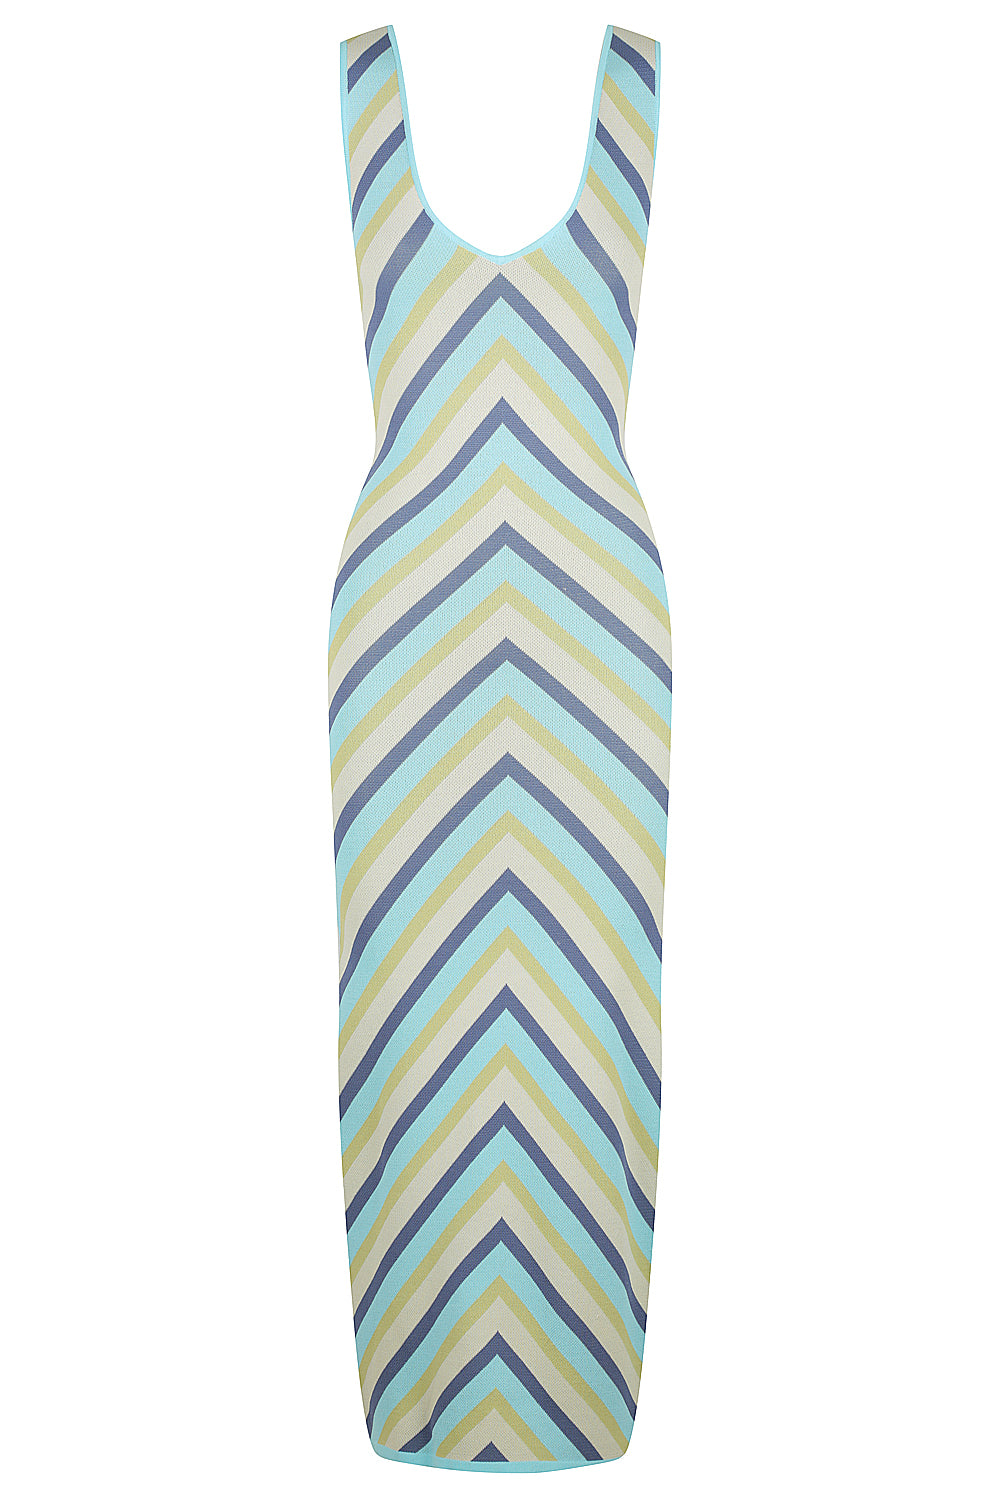 Maxine Vertical Stripe Dress - Blue Curacao / Citrus / Denim